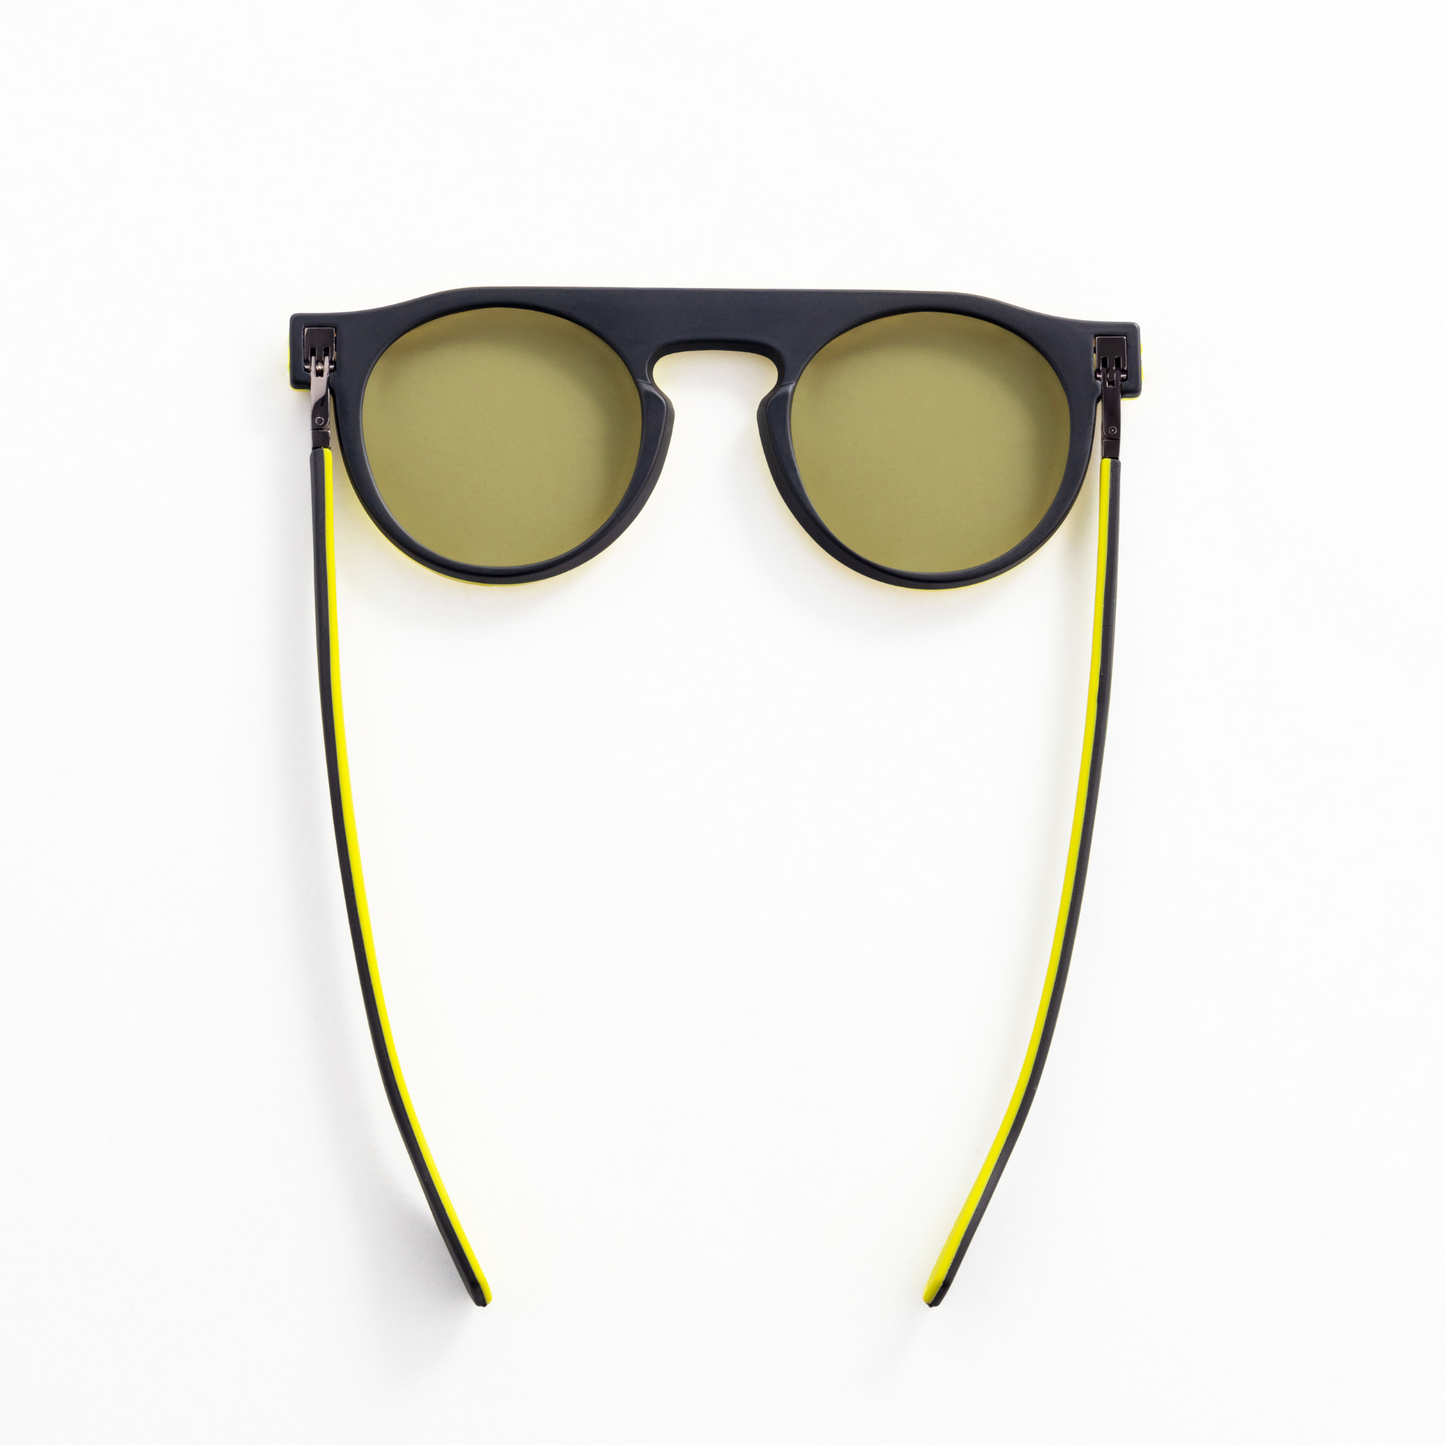 Reverso sunglasses black & yellow reversible & ultra light top view